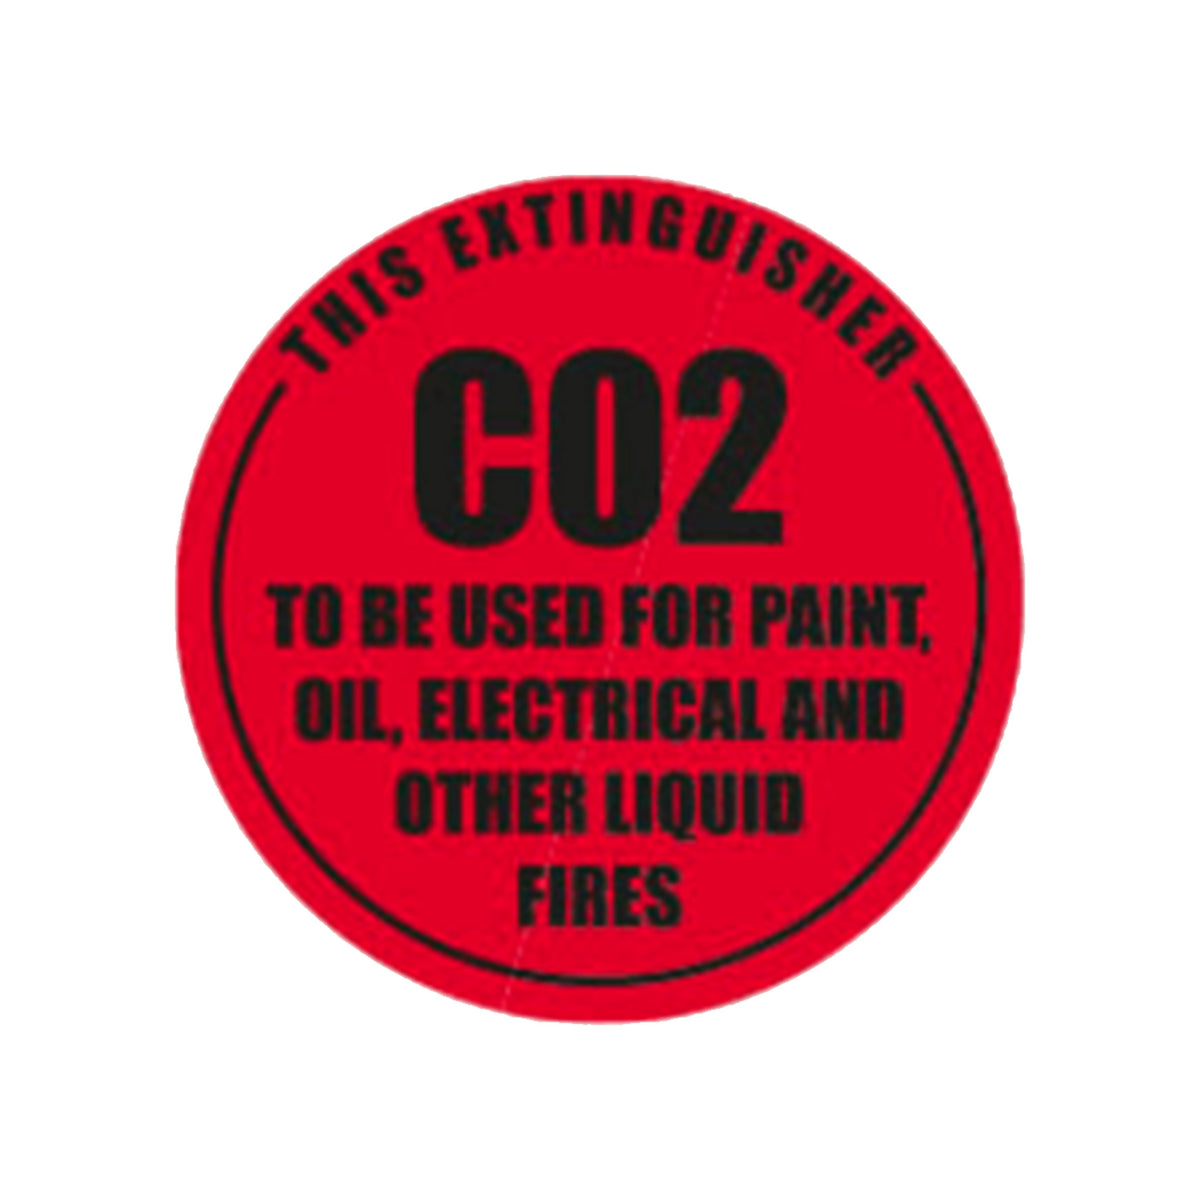 CO2 extinguisher identification sign